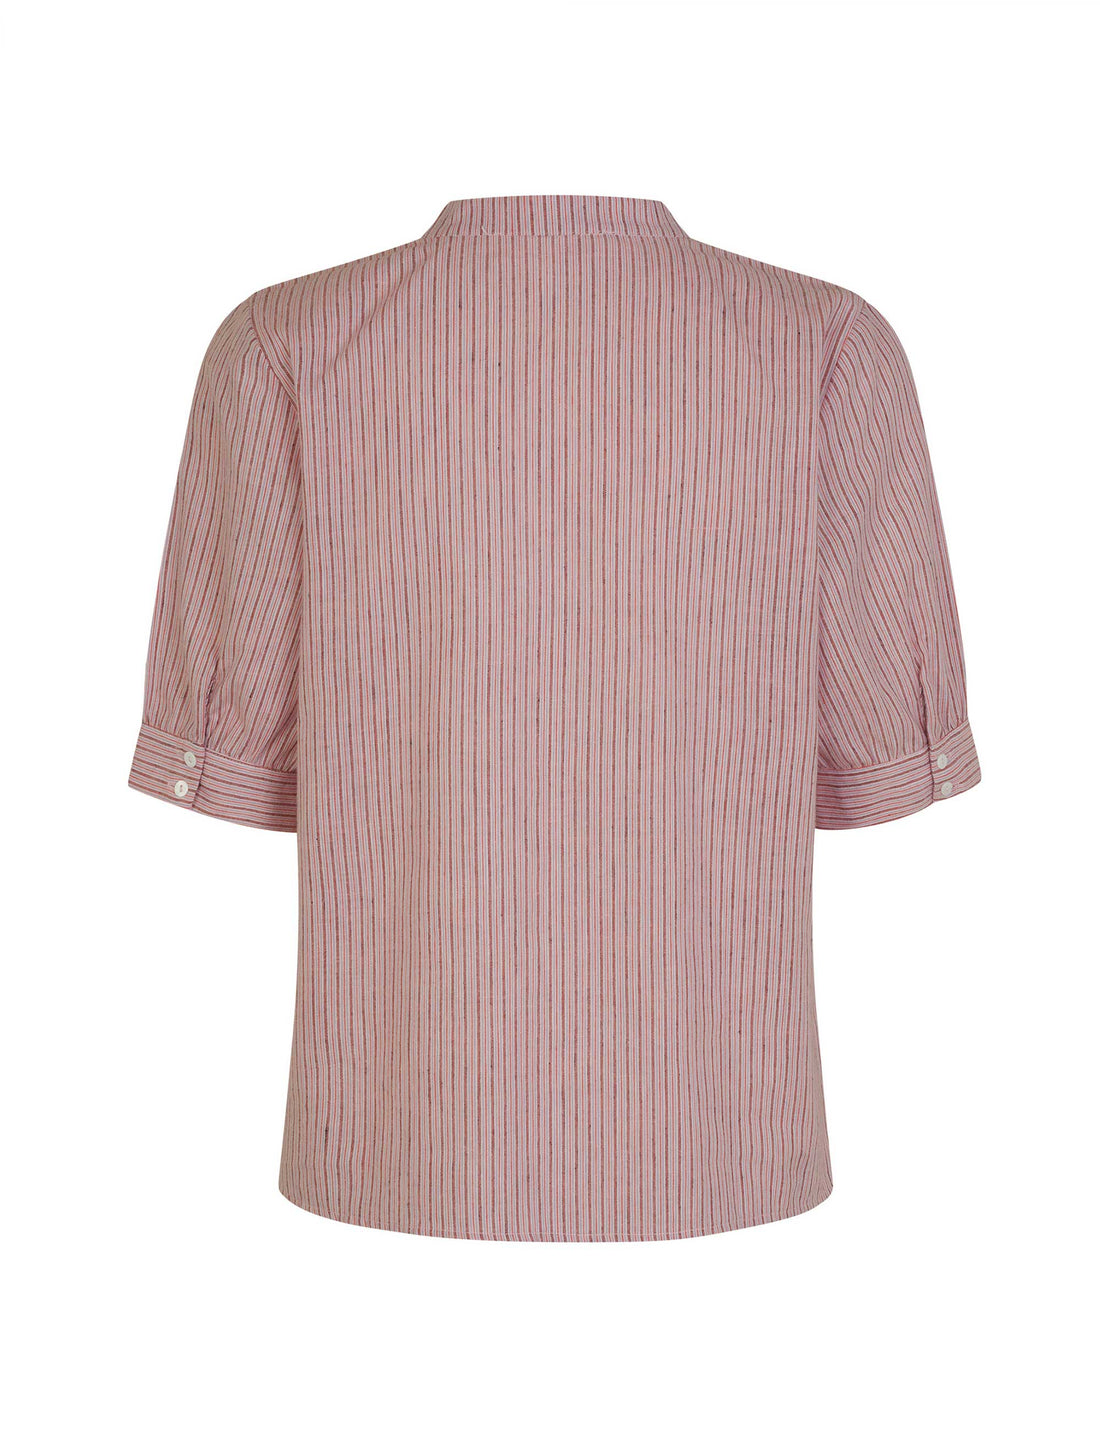 Maja short sleeve shirt rose/burgundy/red stripe